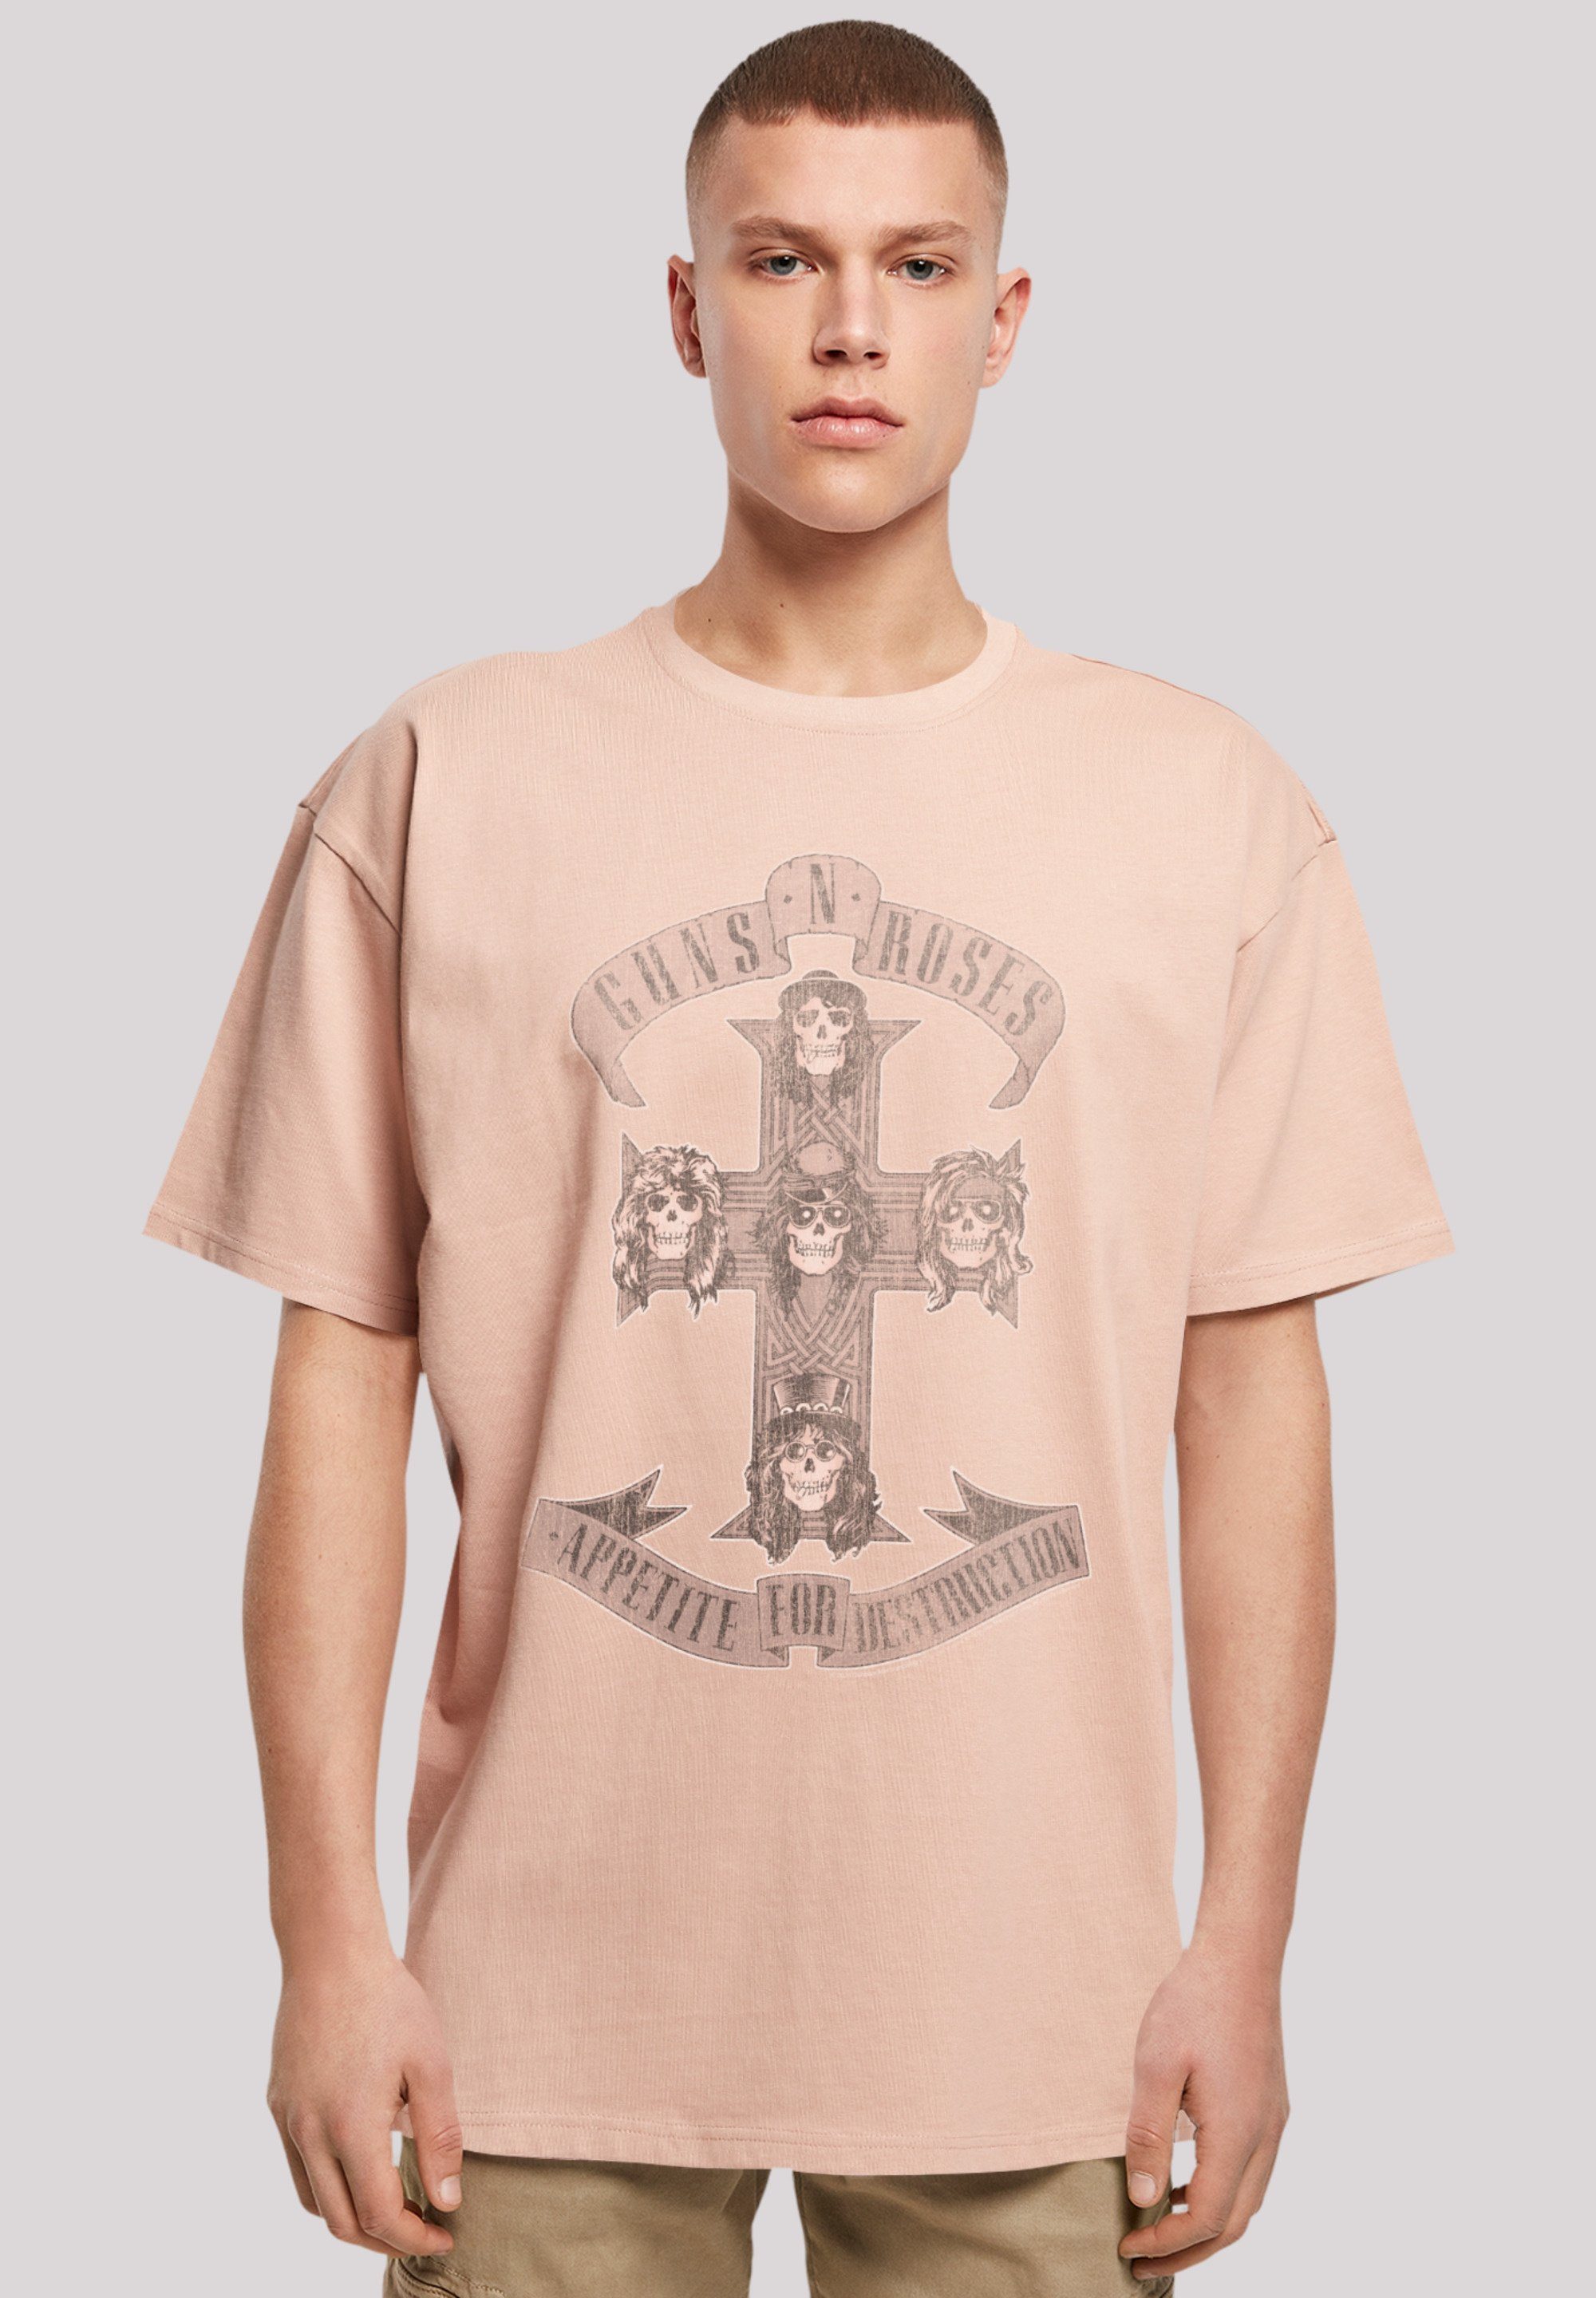 F4NT4STIC T-Shirt Guns 'n' Roses Hard Rock Musik Band Premium Qualität,  Offiziell lizenziertes Guns 'n' Roses T-Shirt